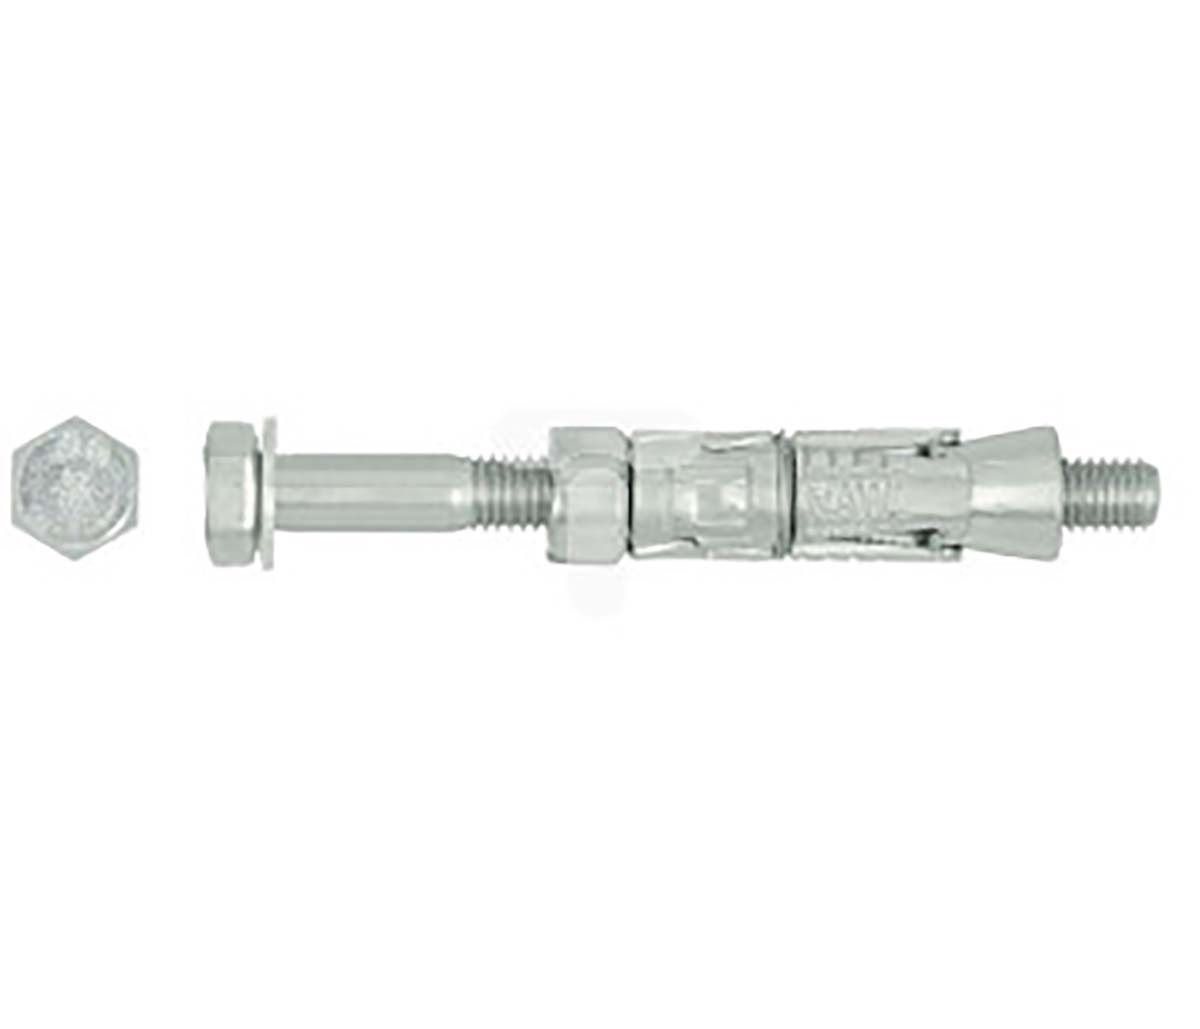 RawlPlug Steel Masonry Anchor M10 x 140mm, 16mm fixing hole